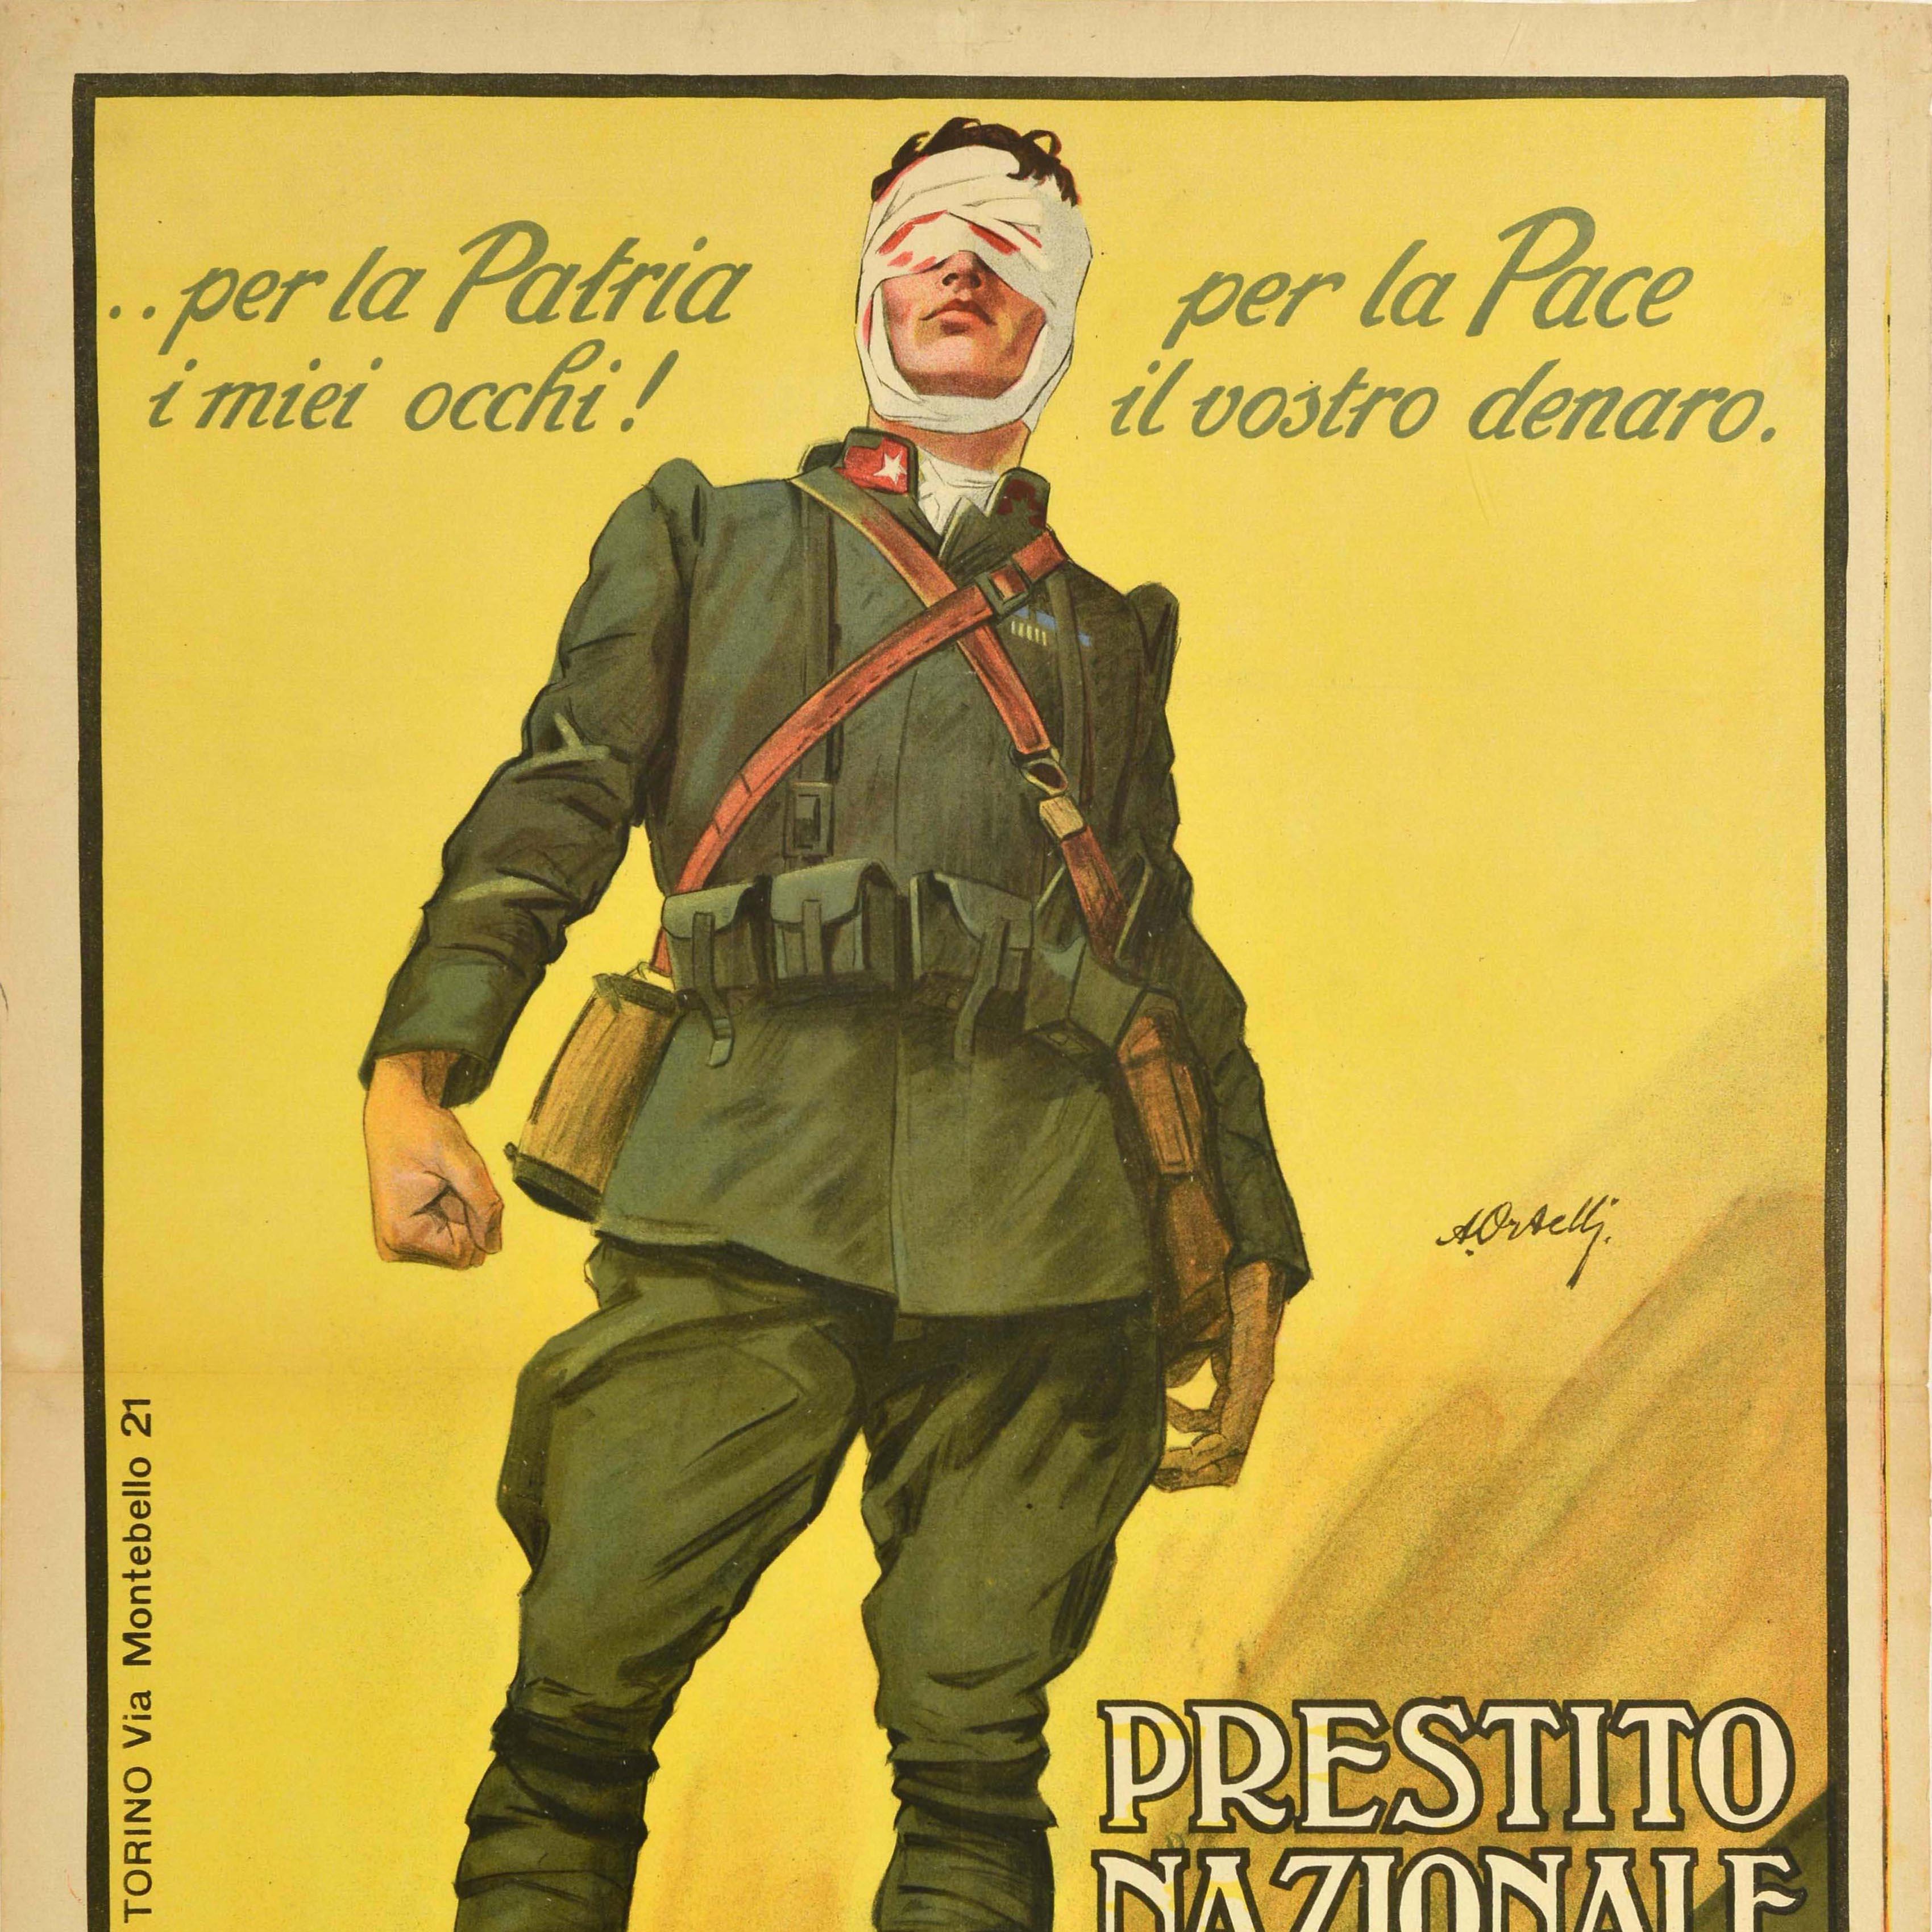 Original Antikes Kriegs Bond-Poster, National Loan, WWI, Prestito Nazionale, Italien, Spitze (Orange), Print, von Unknown